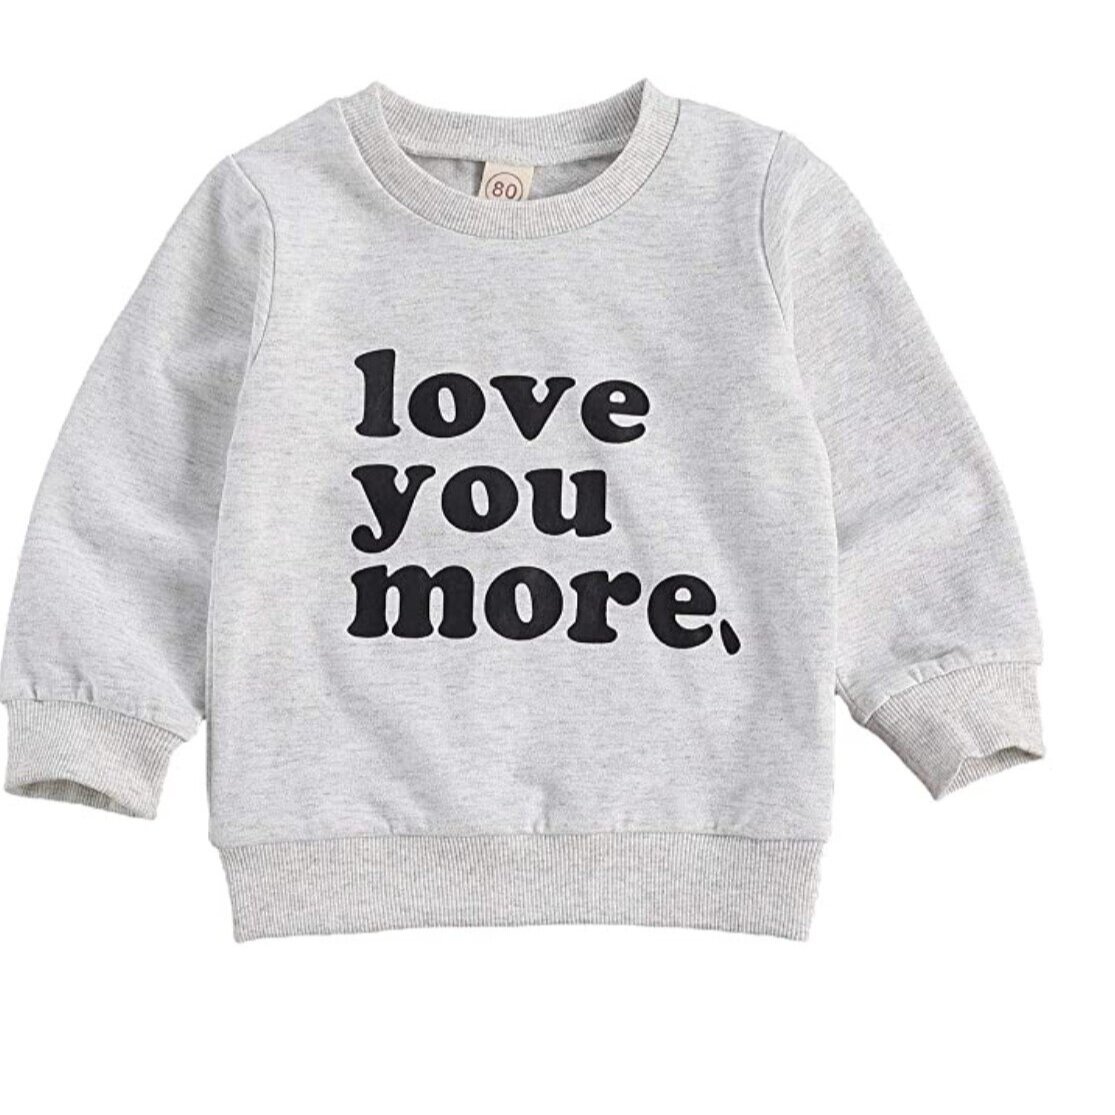 Baby Boy & Toddler Valentine's Day Outfit Ideas — christie ferrari